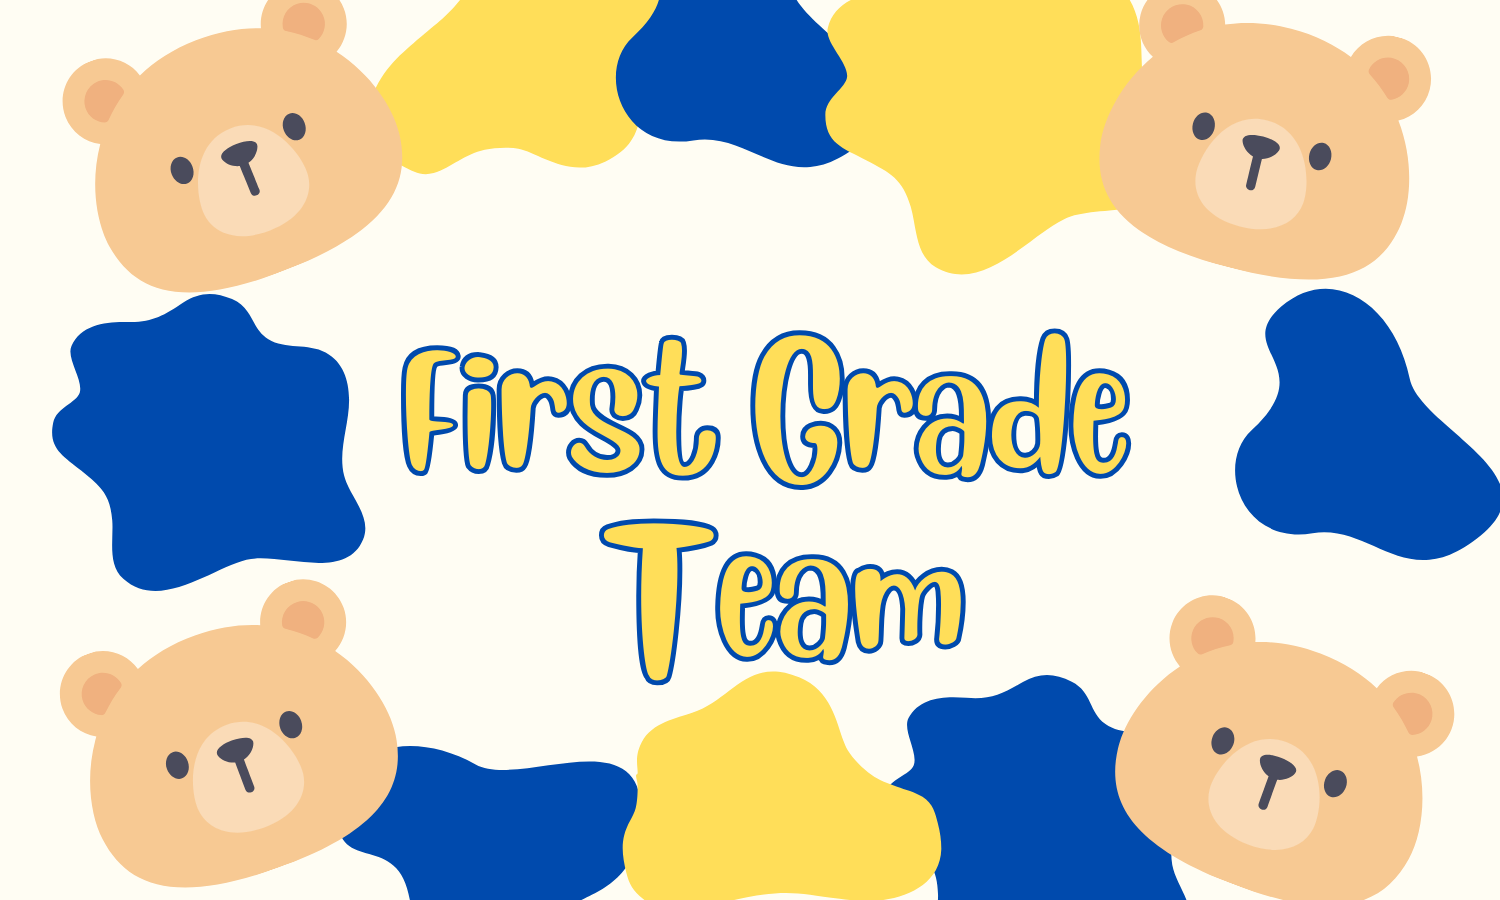 First Grade Team Image Title